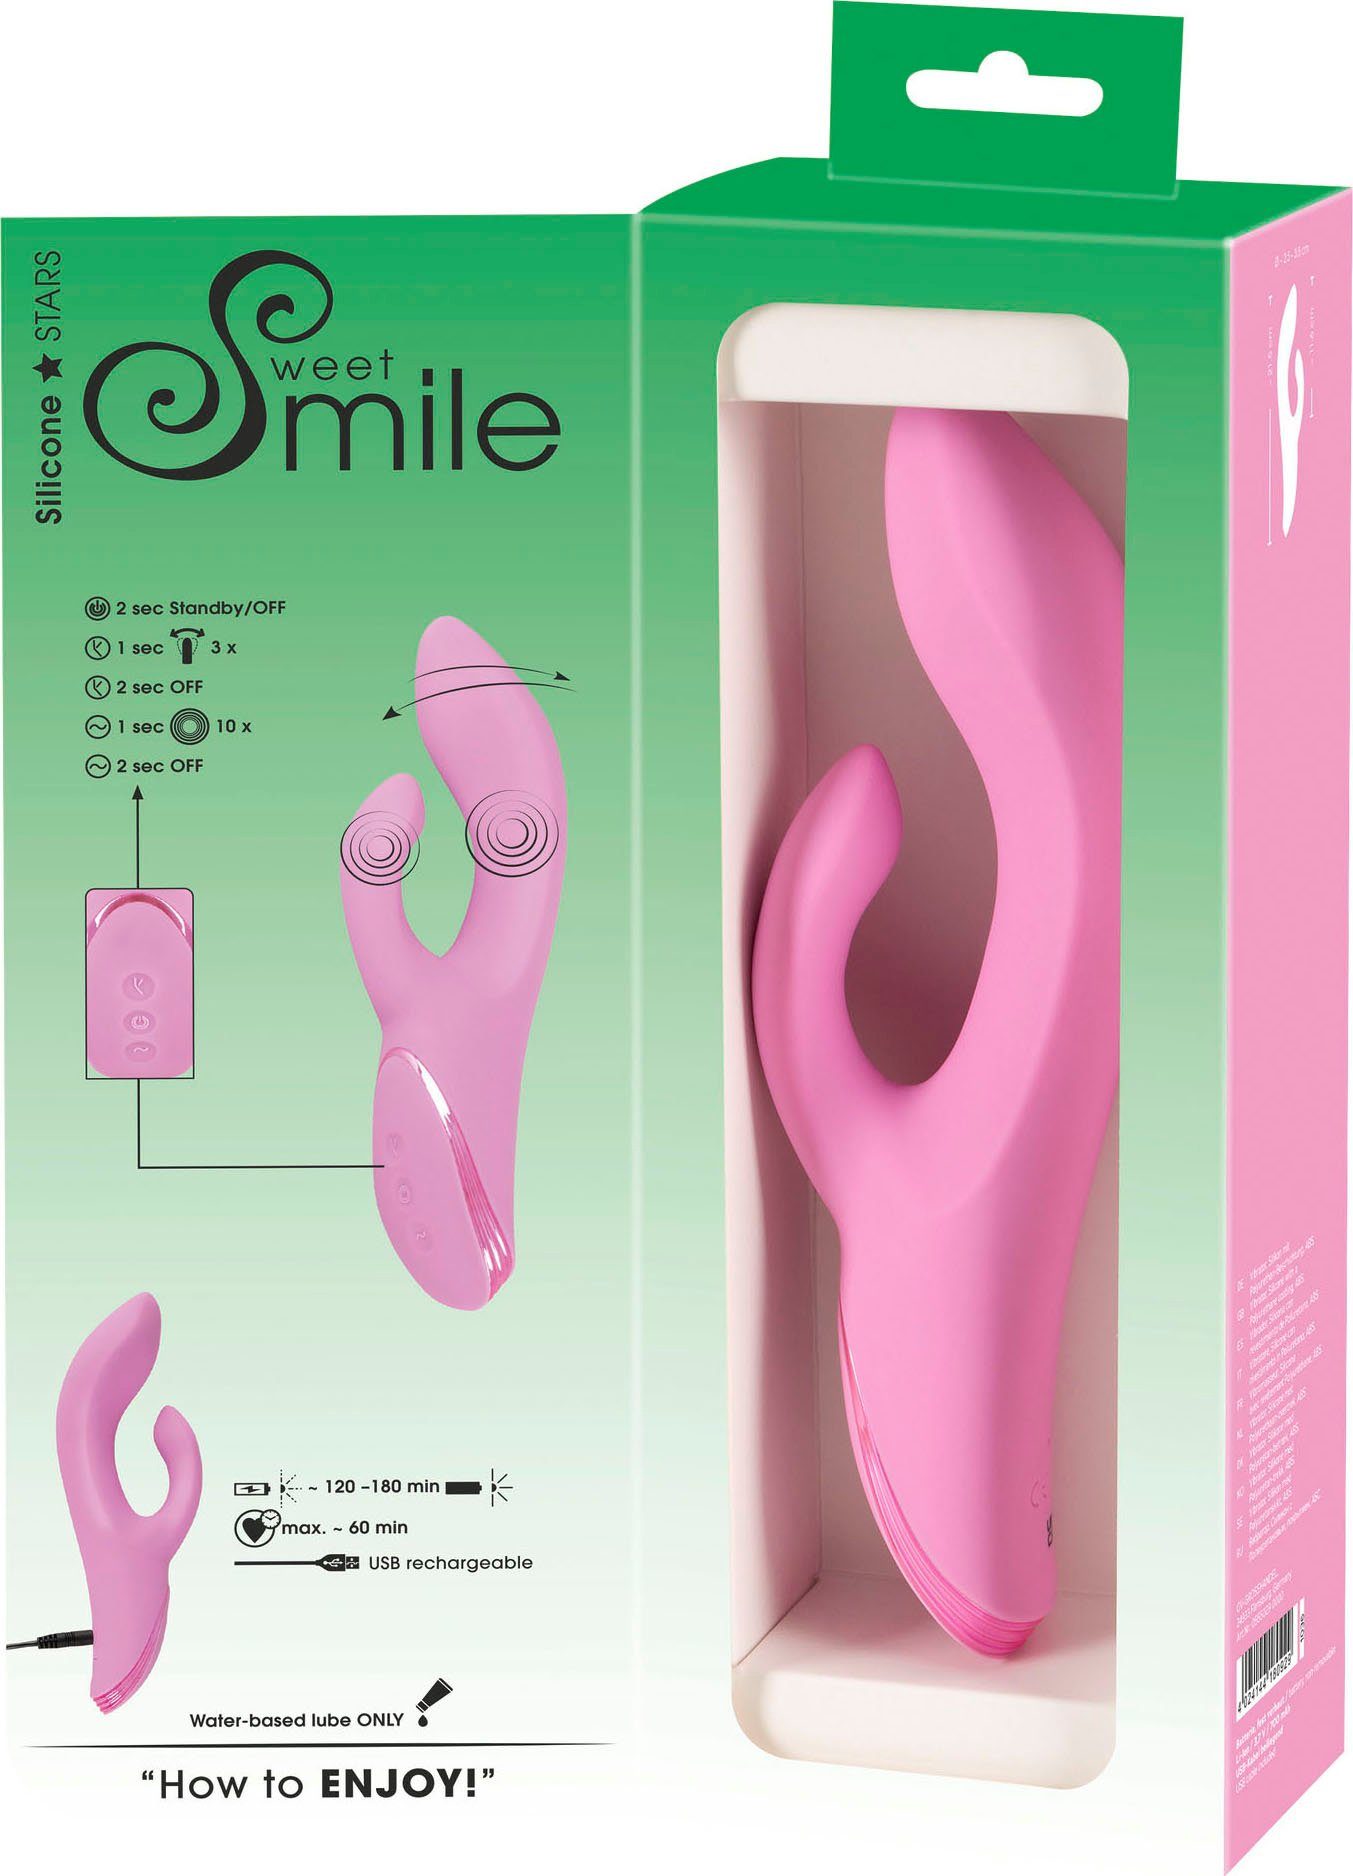 Rabbit-Vibrator Smile